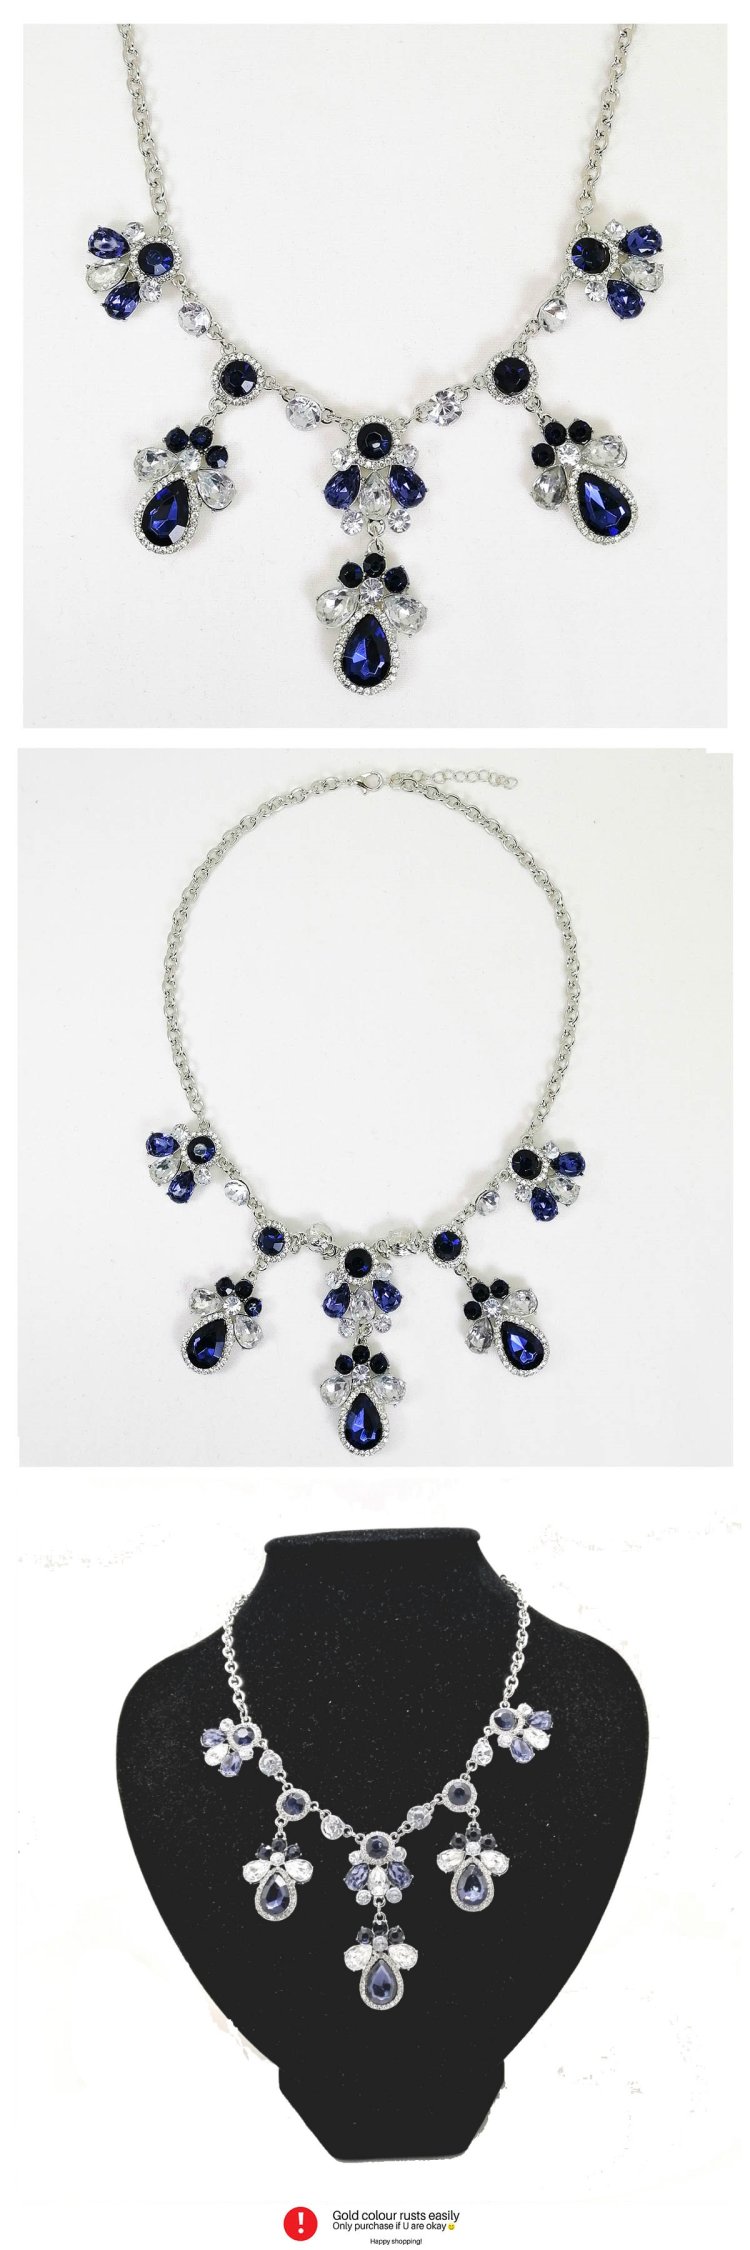 A-CJ-9243 Sapphire Blue Gem Bead Crystal Elegance Necklace